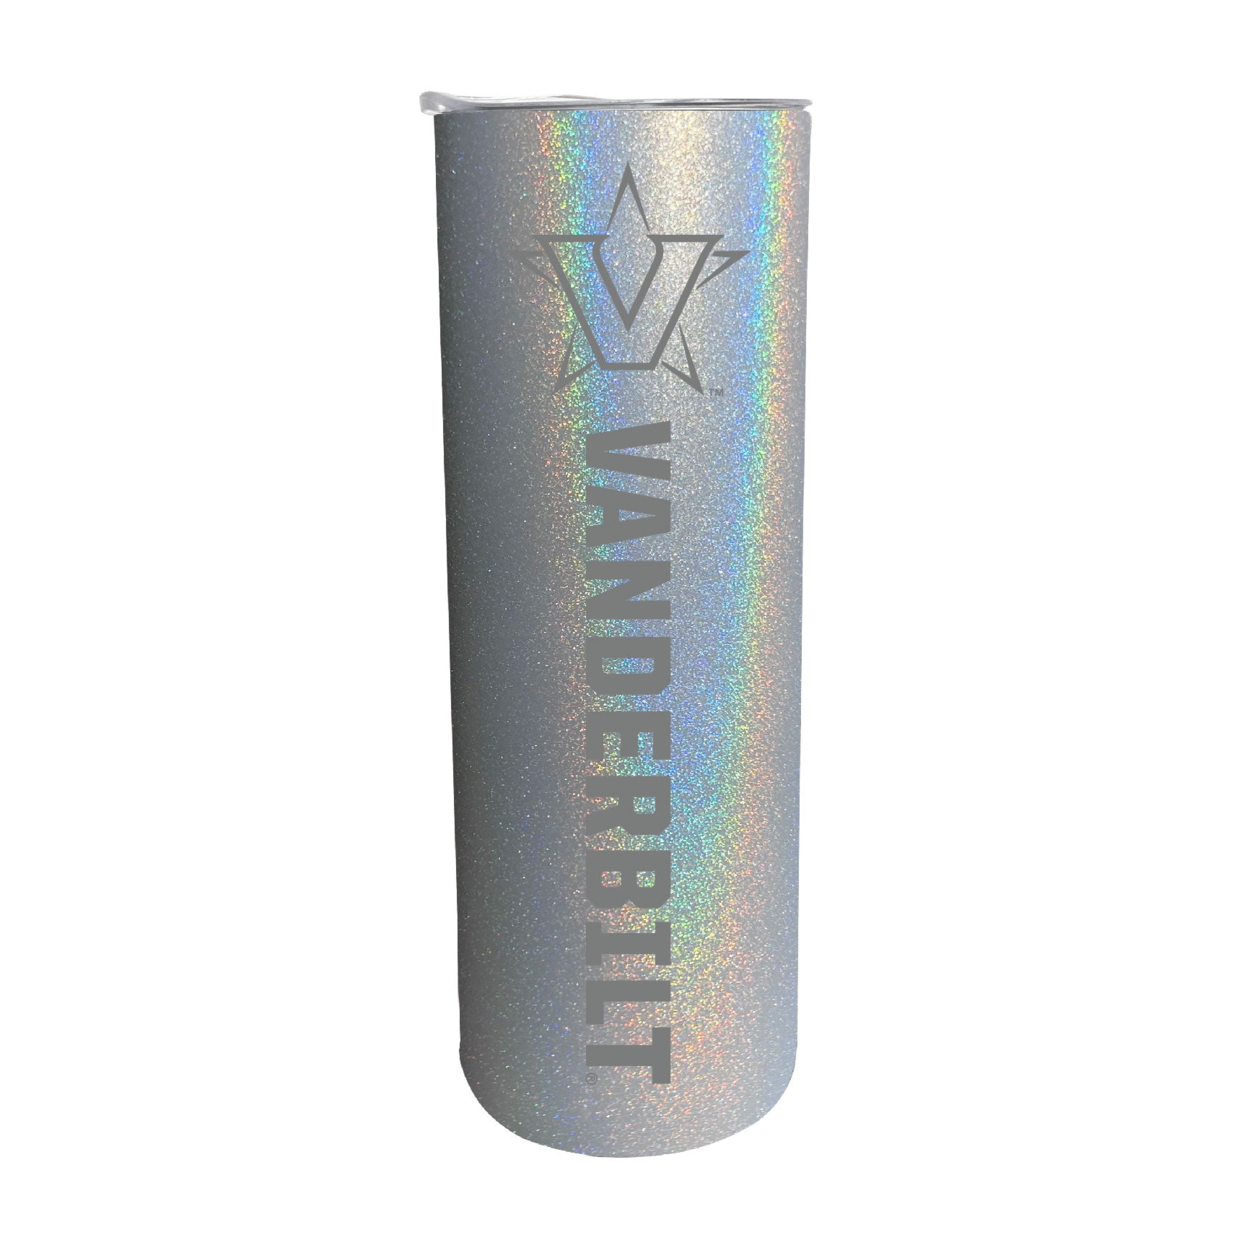 Vanderbilt University 20oz Insulated Stainless Steel Skinny Tumbler - Rainbow Glitter Grey